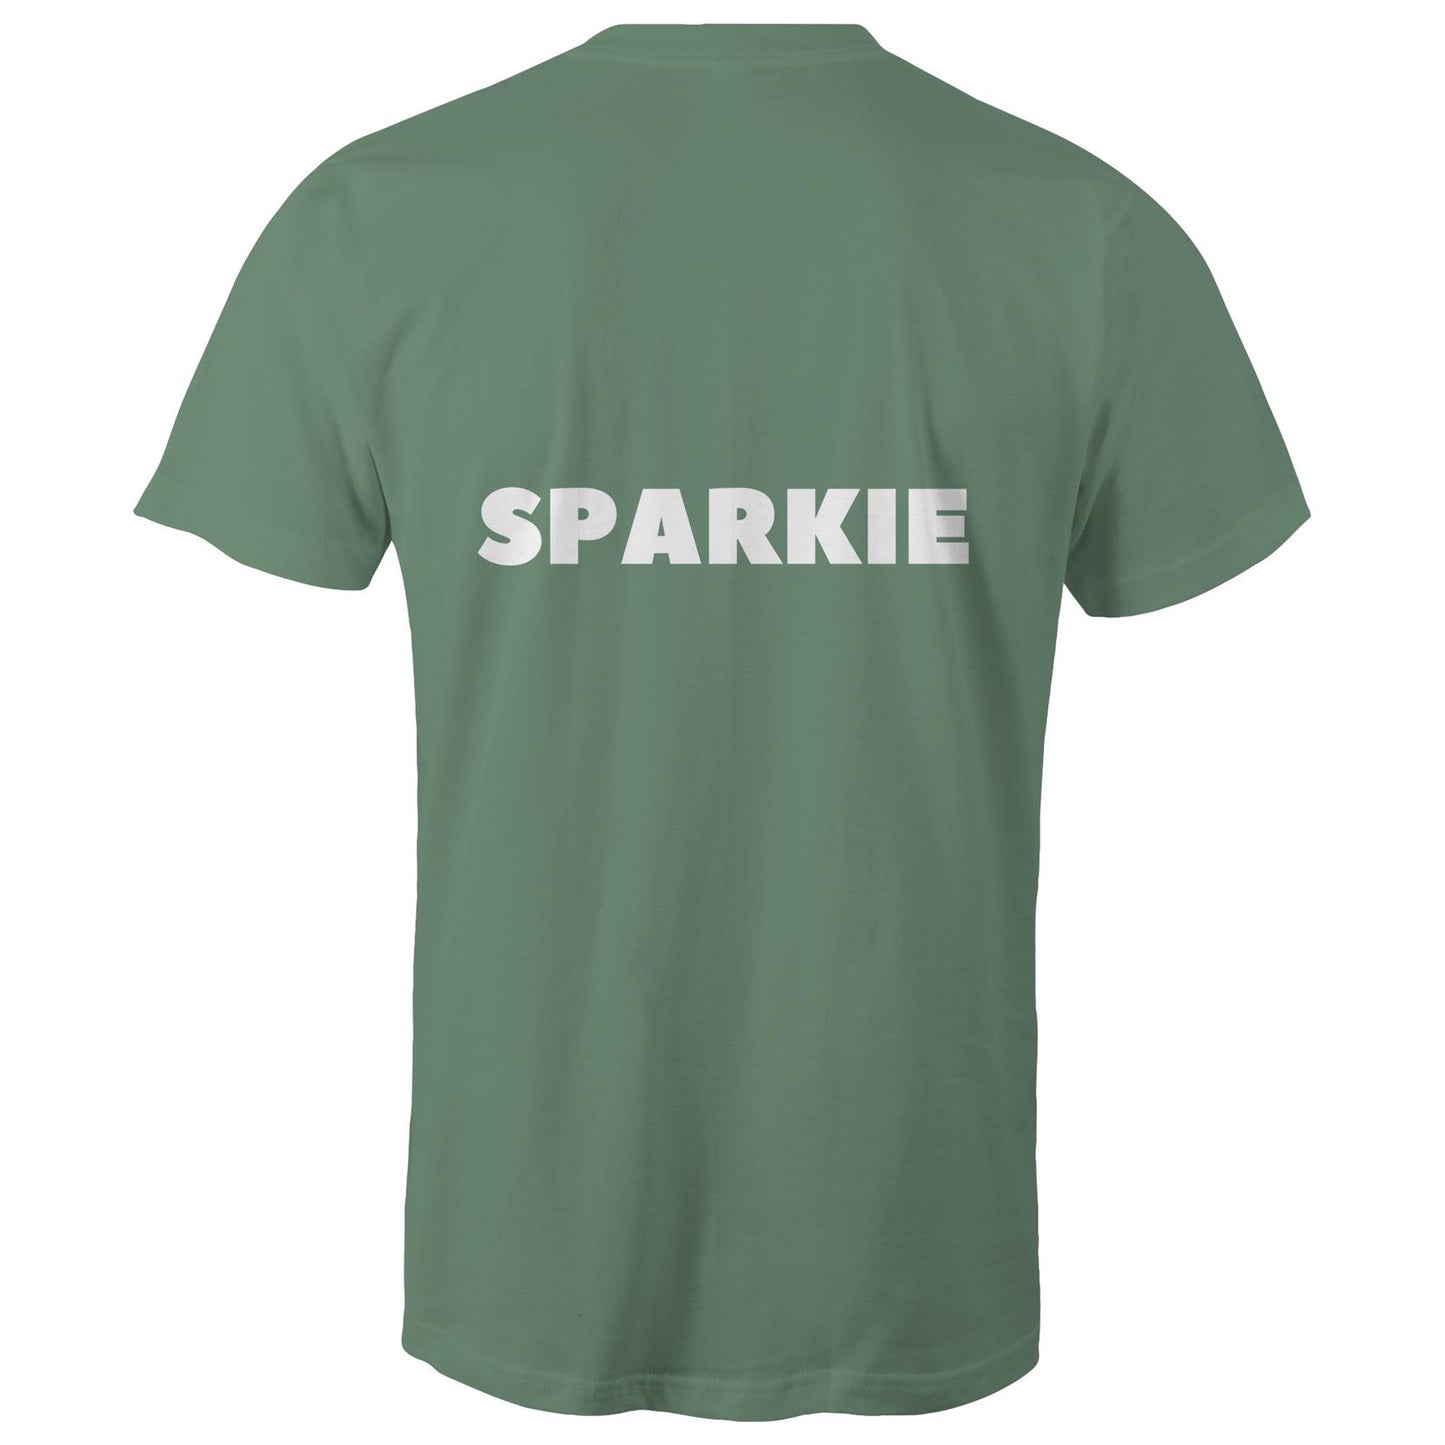 SPARKIE - Unisex T-Shirt